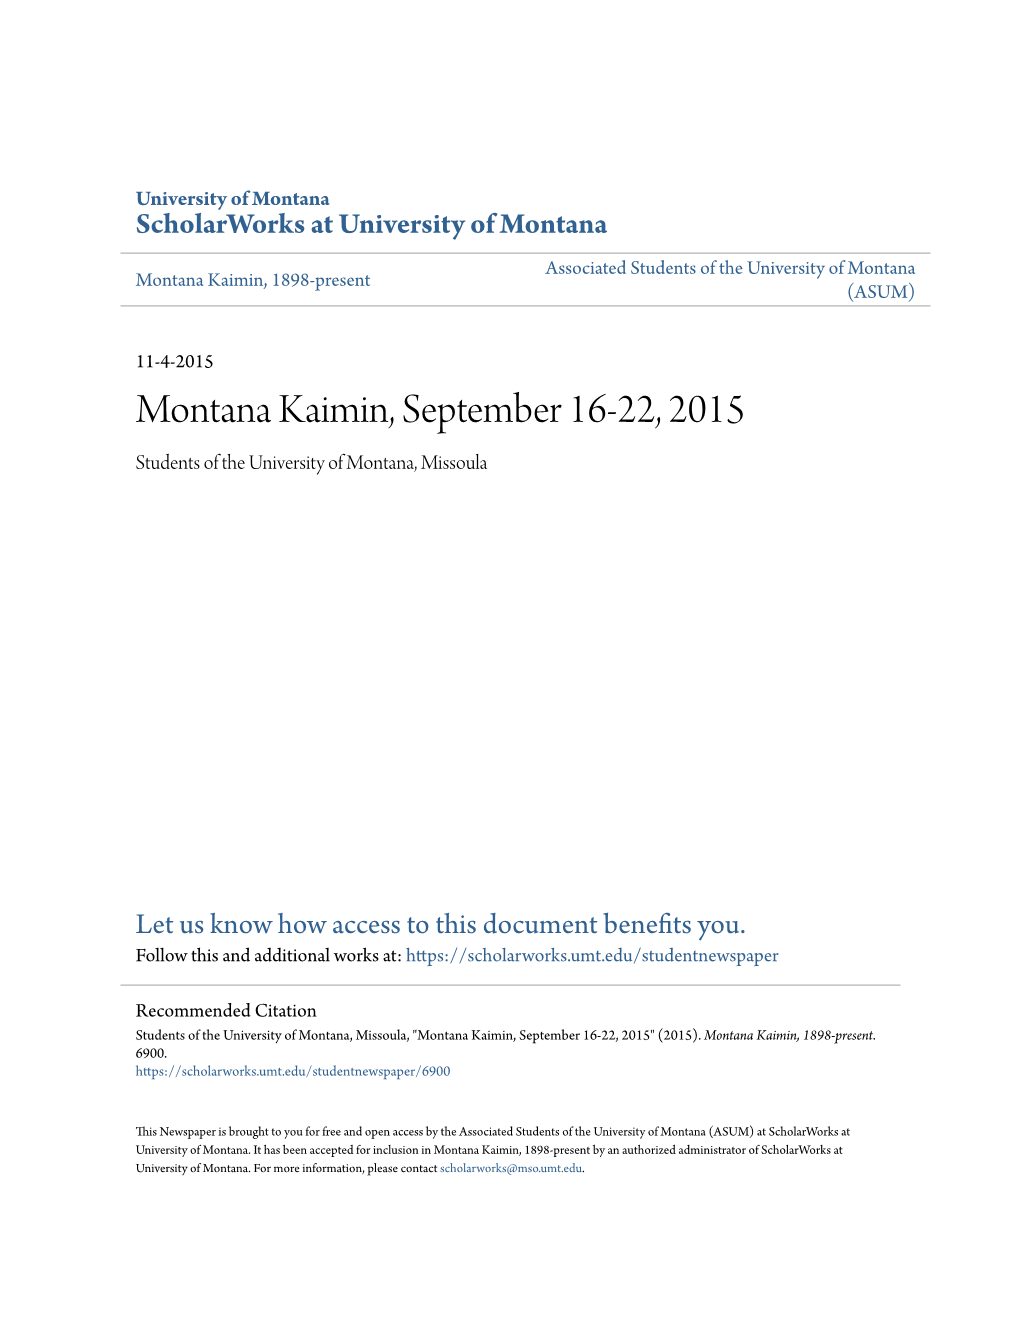 Montana Kaimin, September 16-22, 2015 Students of the University of Montana, Missoula